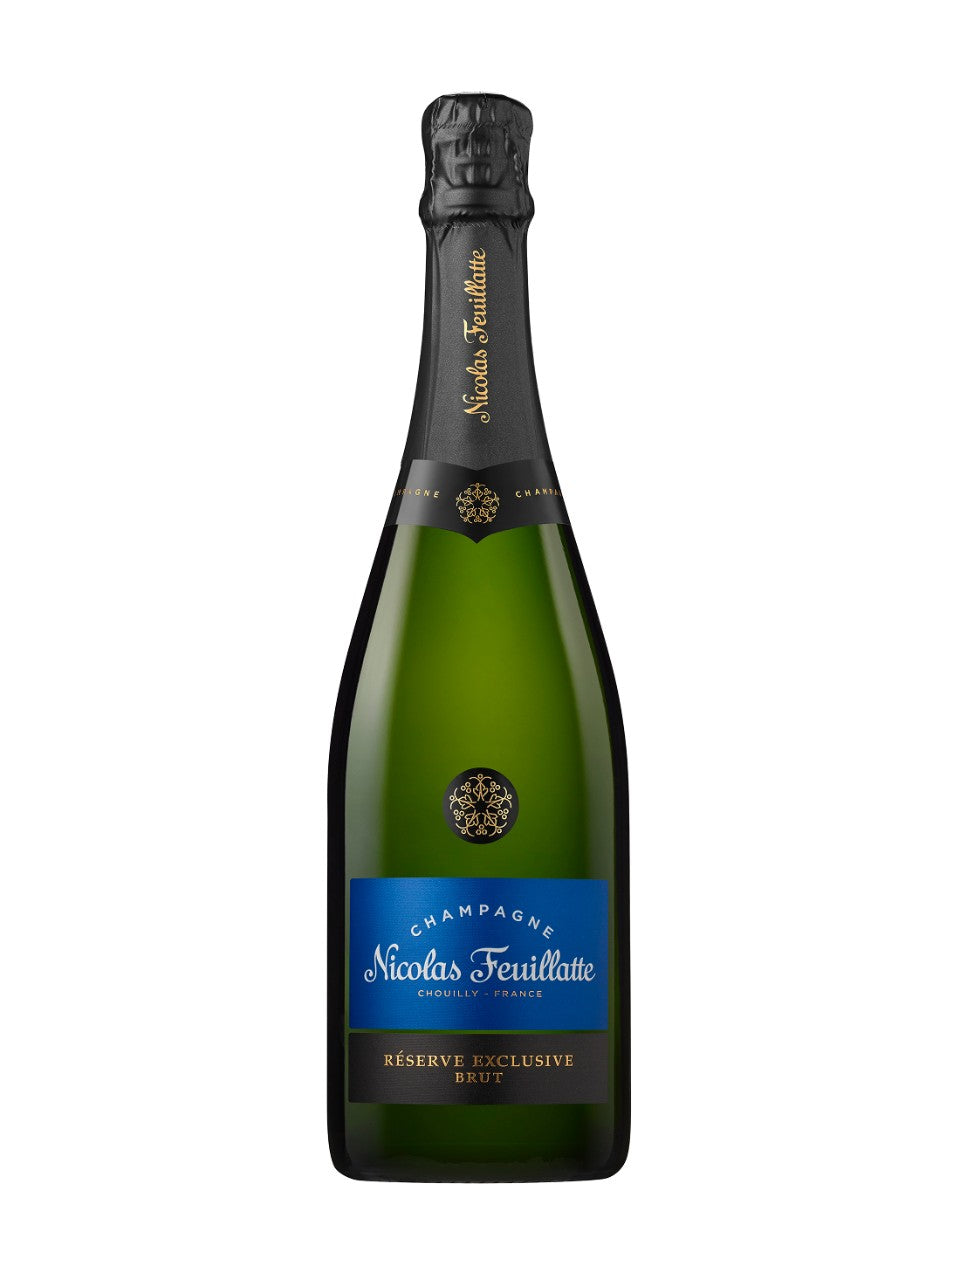 Nicolas Feuillatte Brut Champagne 750 ml bottle